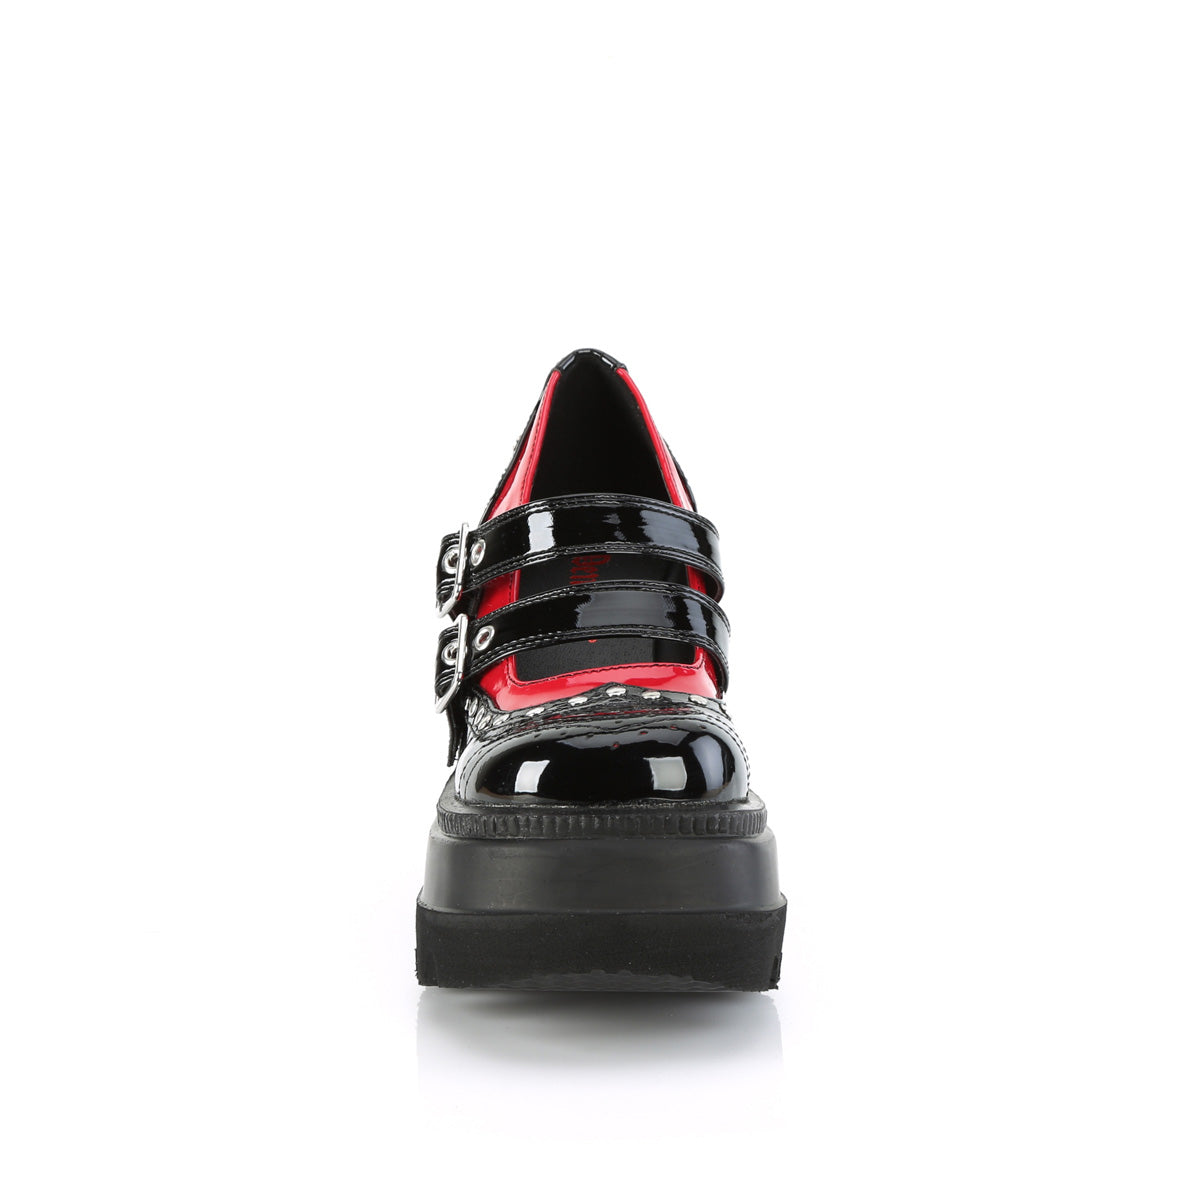 SHAKER-27 Demonia Black-Red Patent Women's Heels & Platform Shoes [Demonia Cult Alternative Footwear]